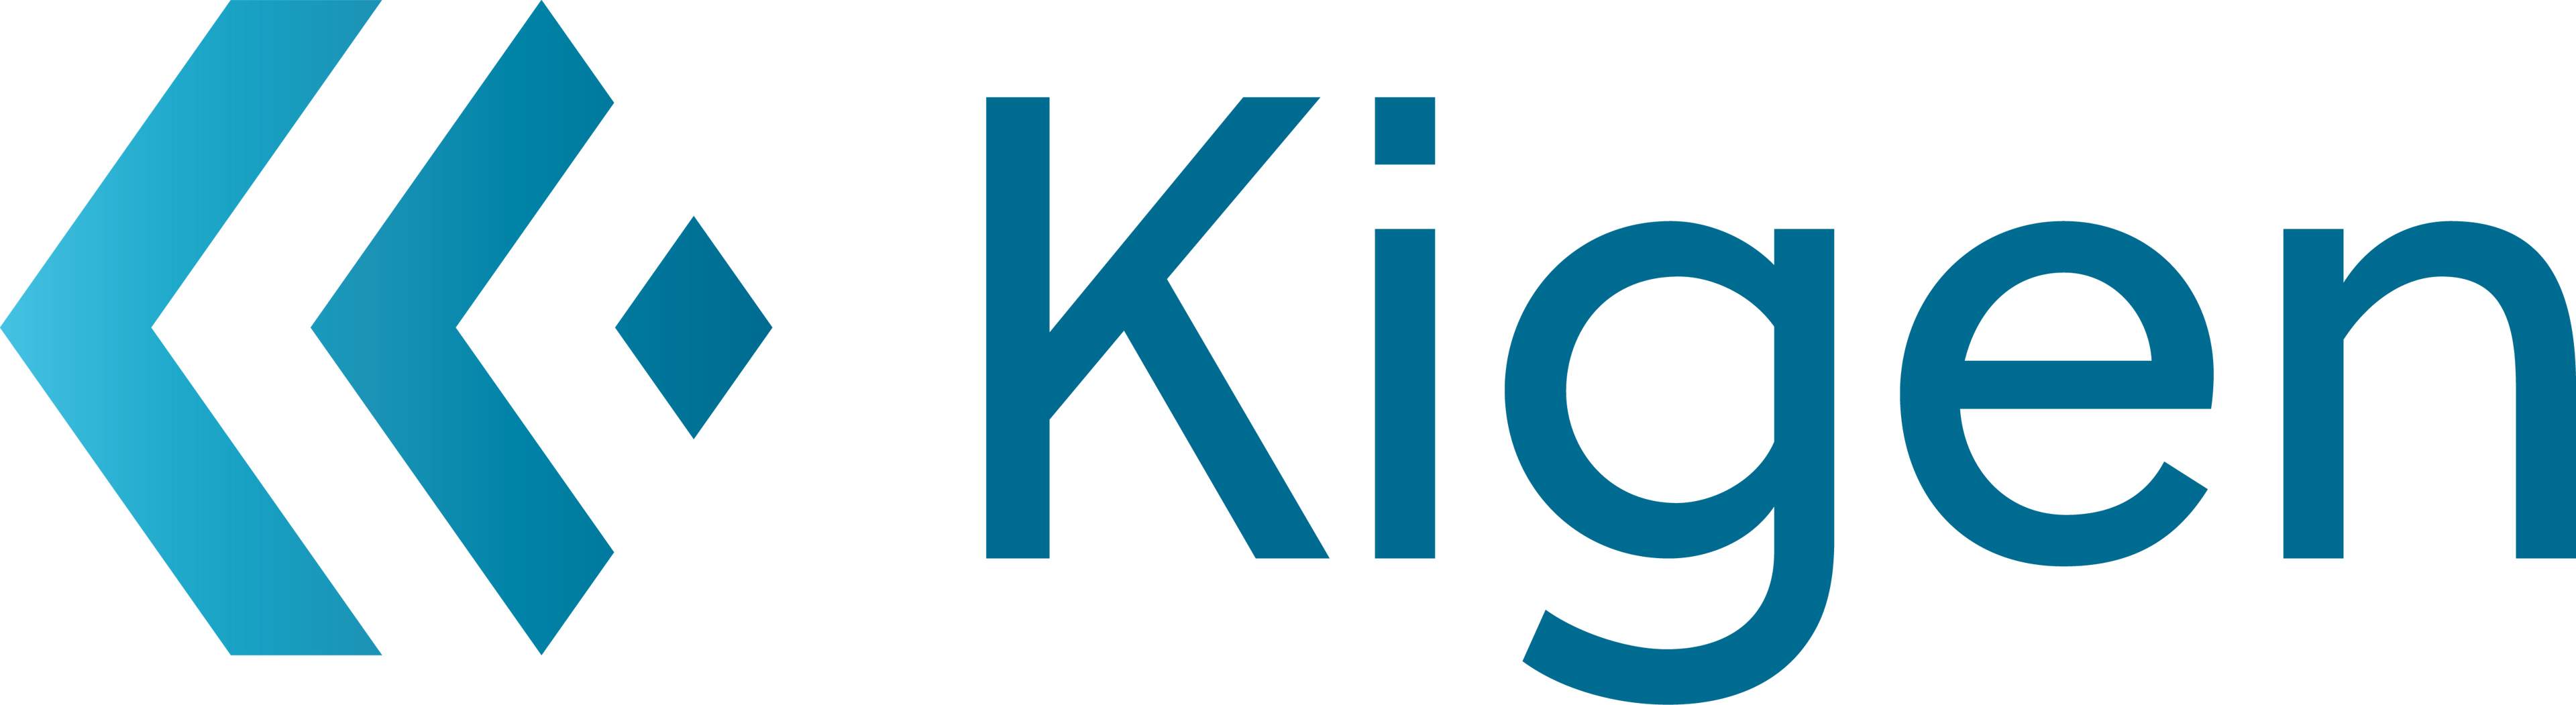 Vision Fund investment portfolio company Kigen's logo